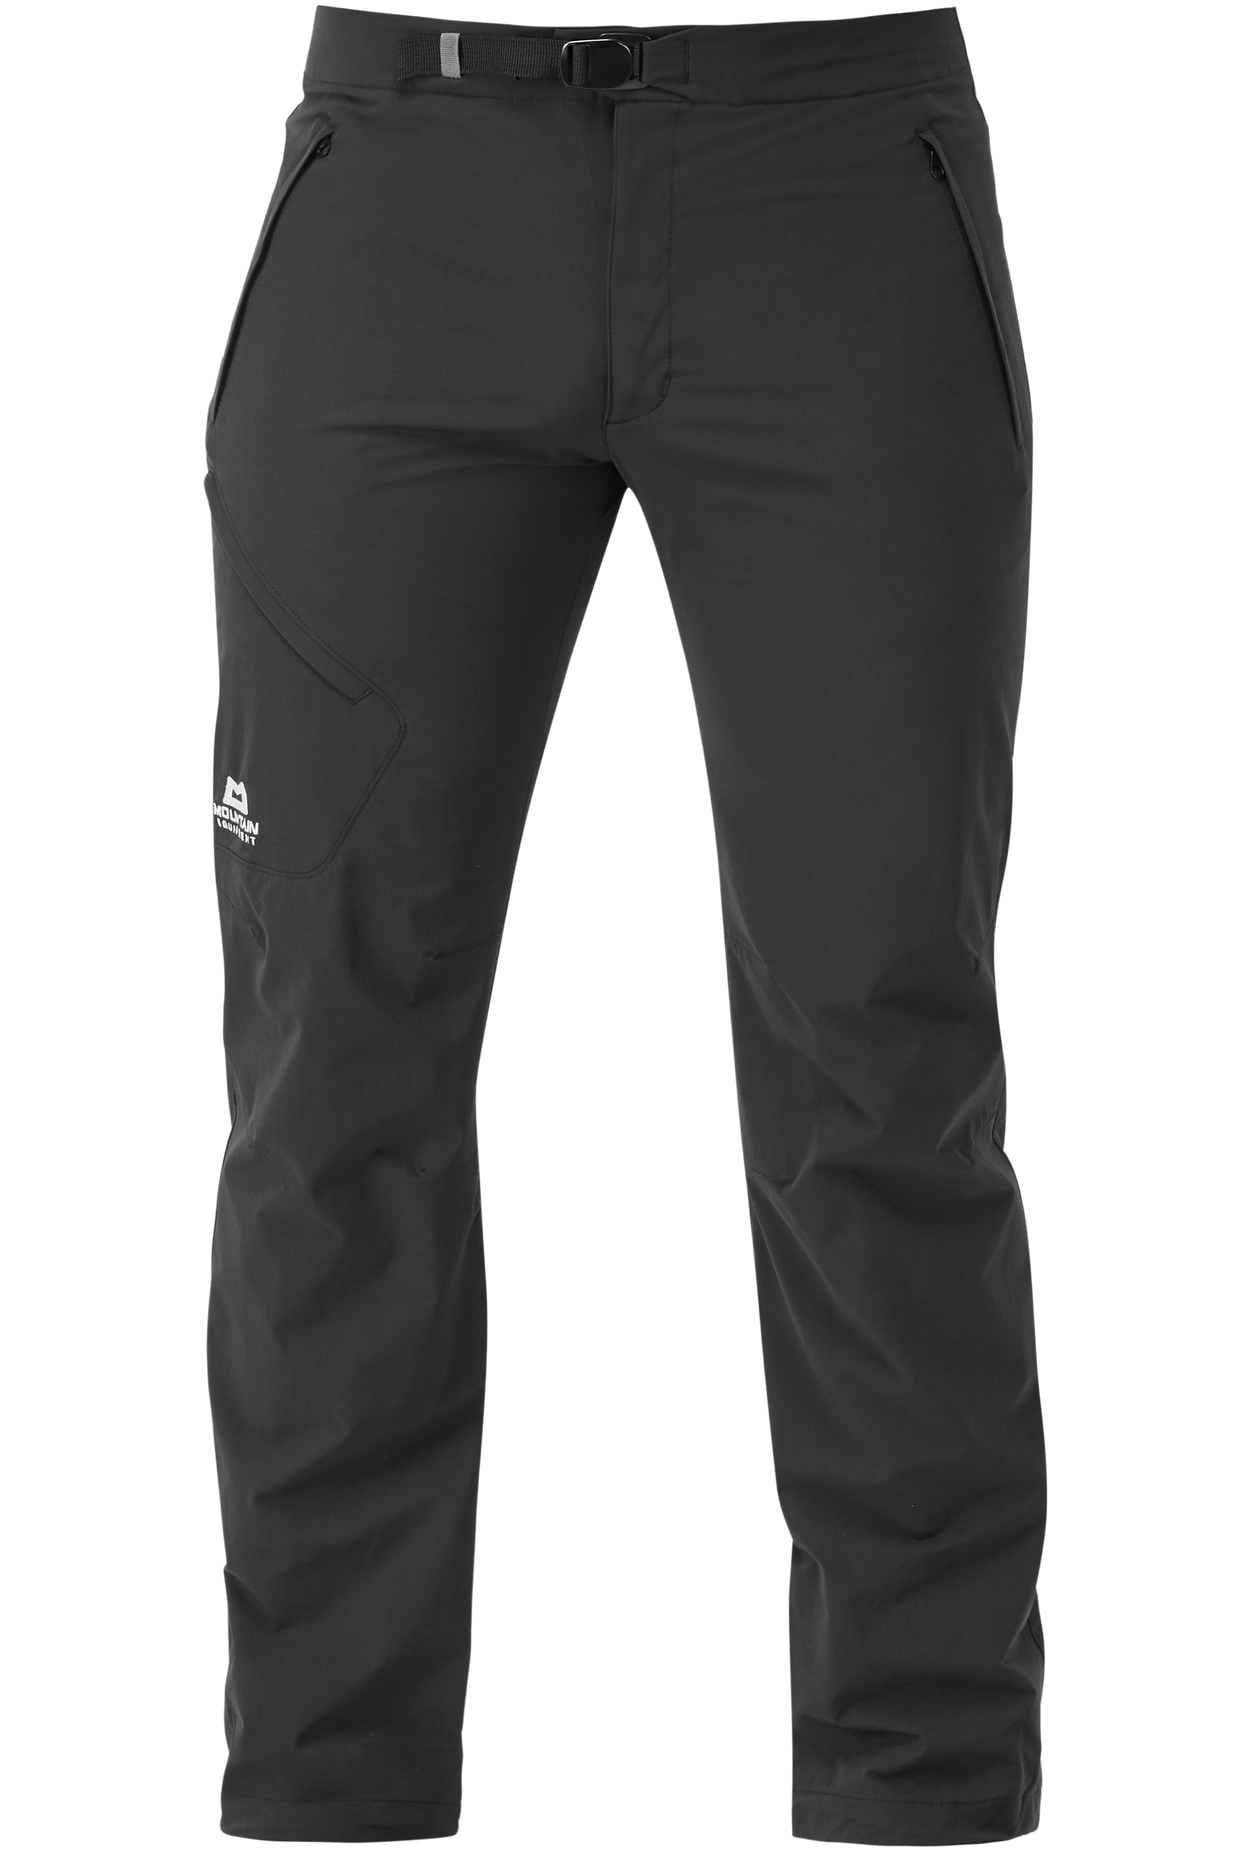 Mountain Equipment pánské softshellové kalhoty Comici Pant - zkrácené Barva: black/black, Velikost: 36/XL